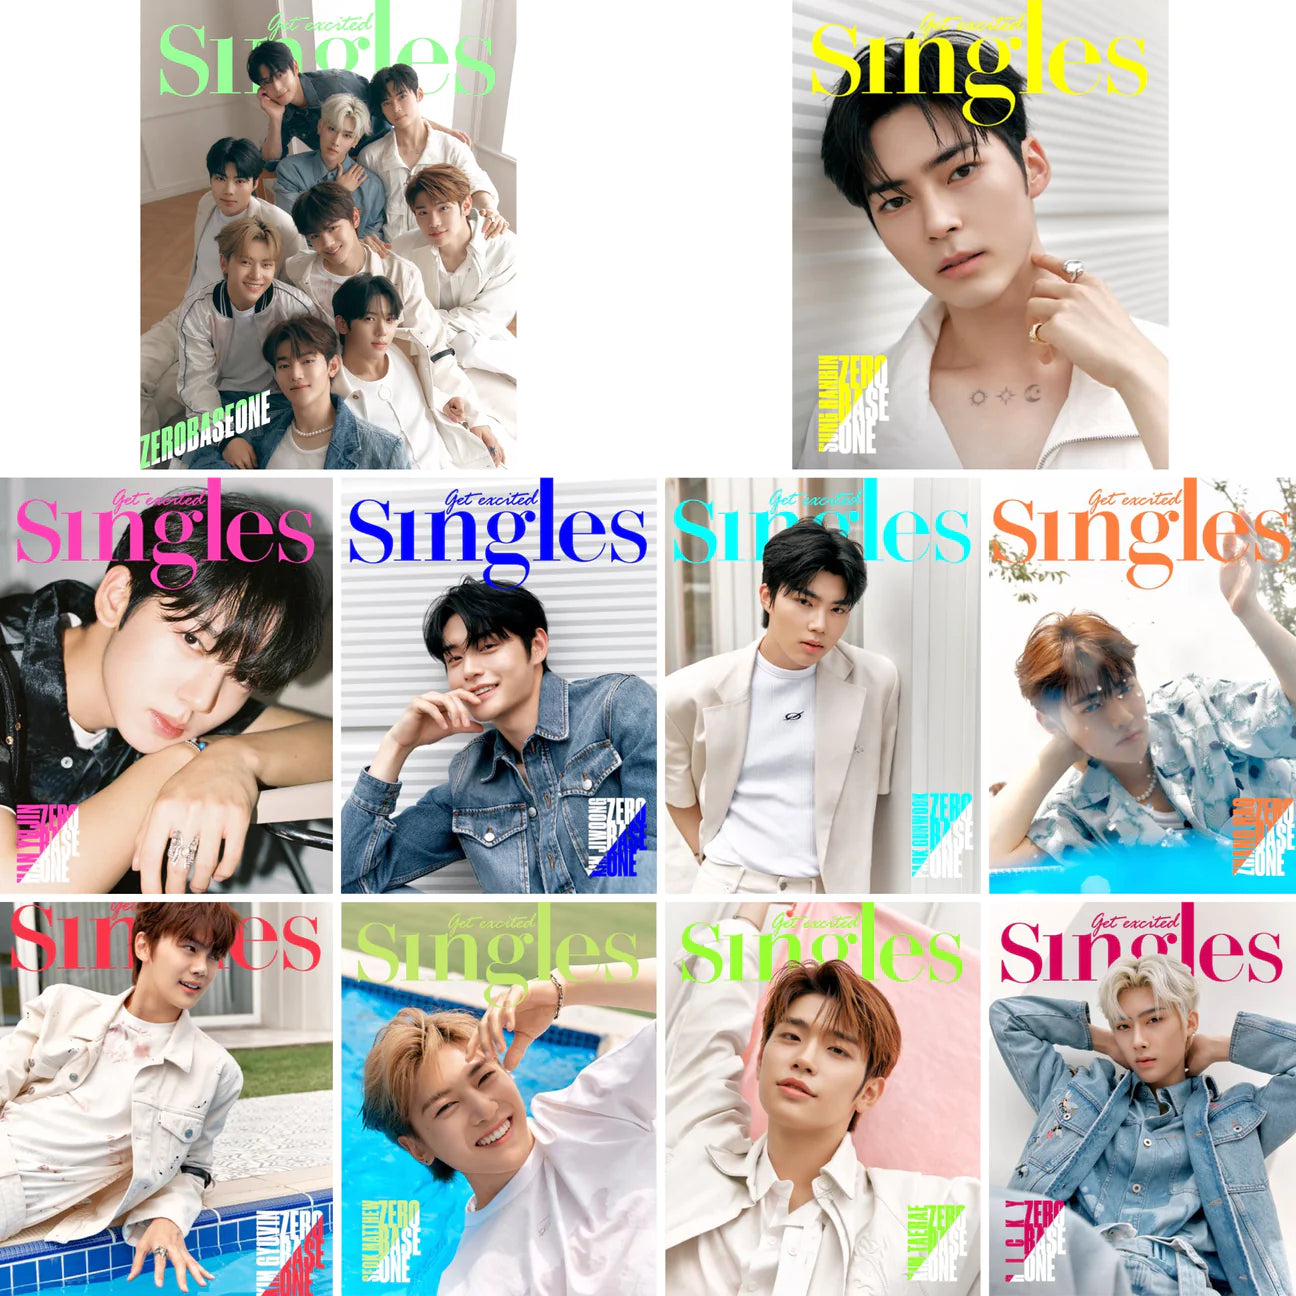 bts - singles magazine